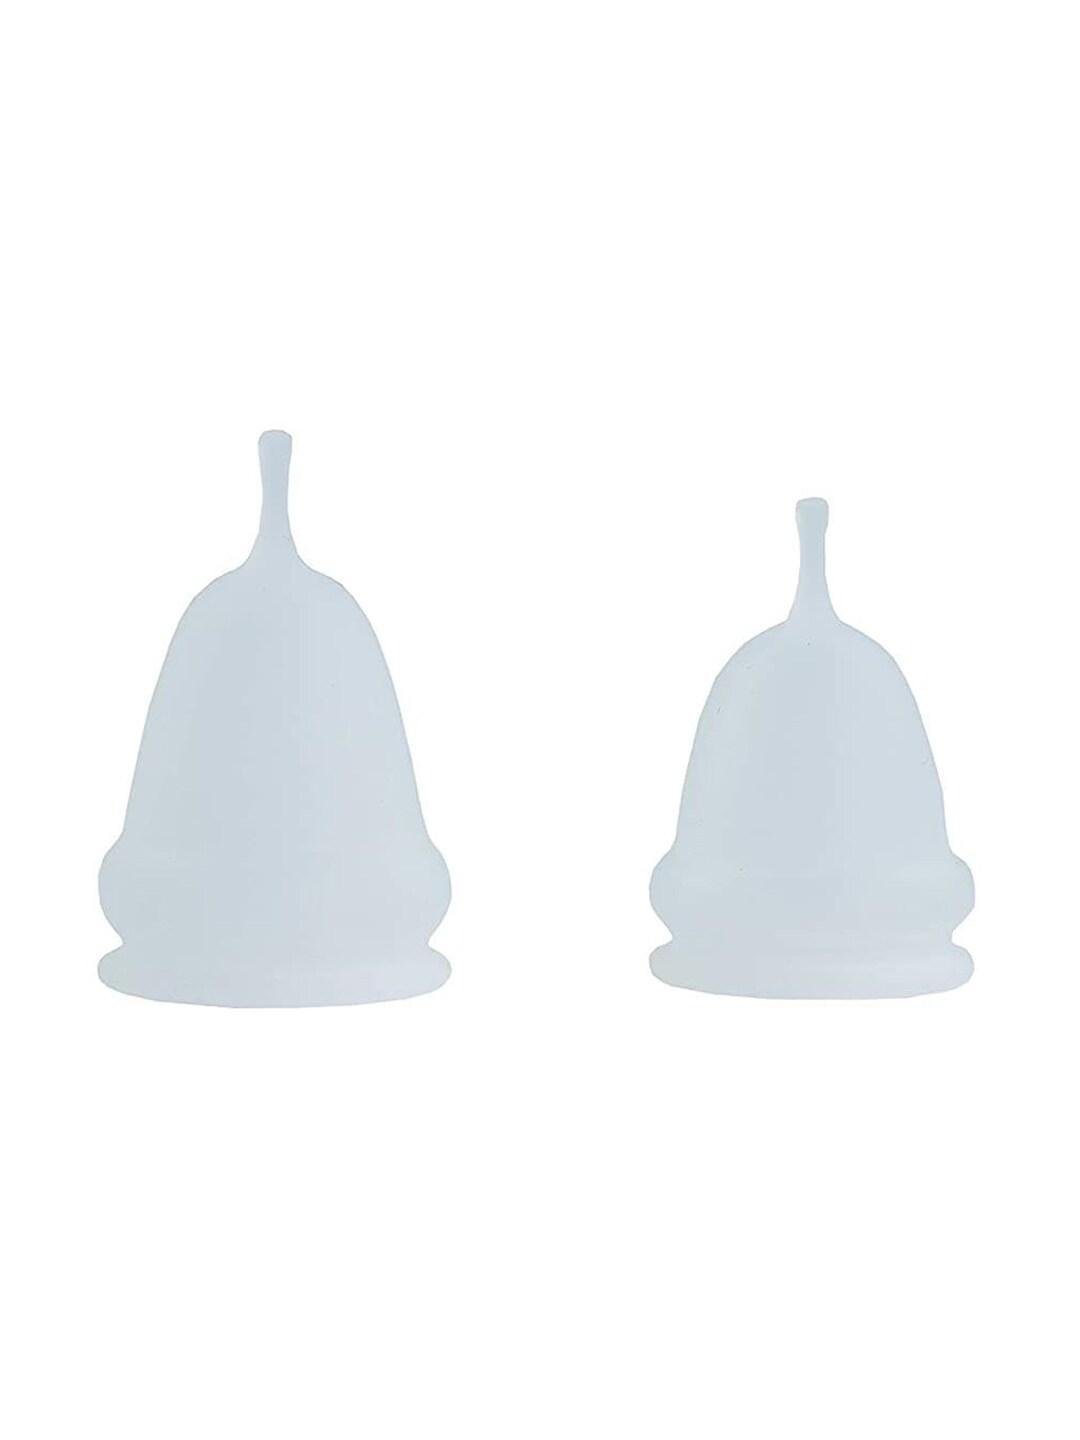 Pure Cups Set of 2 Latex Free Medical Grade Reusable Menstrual Cups - Medium & Large